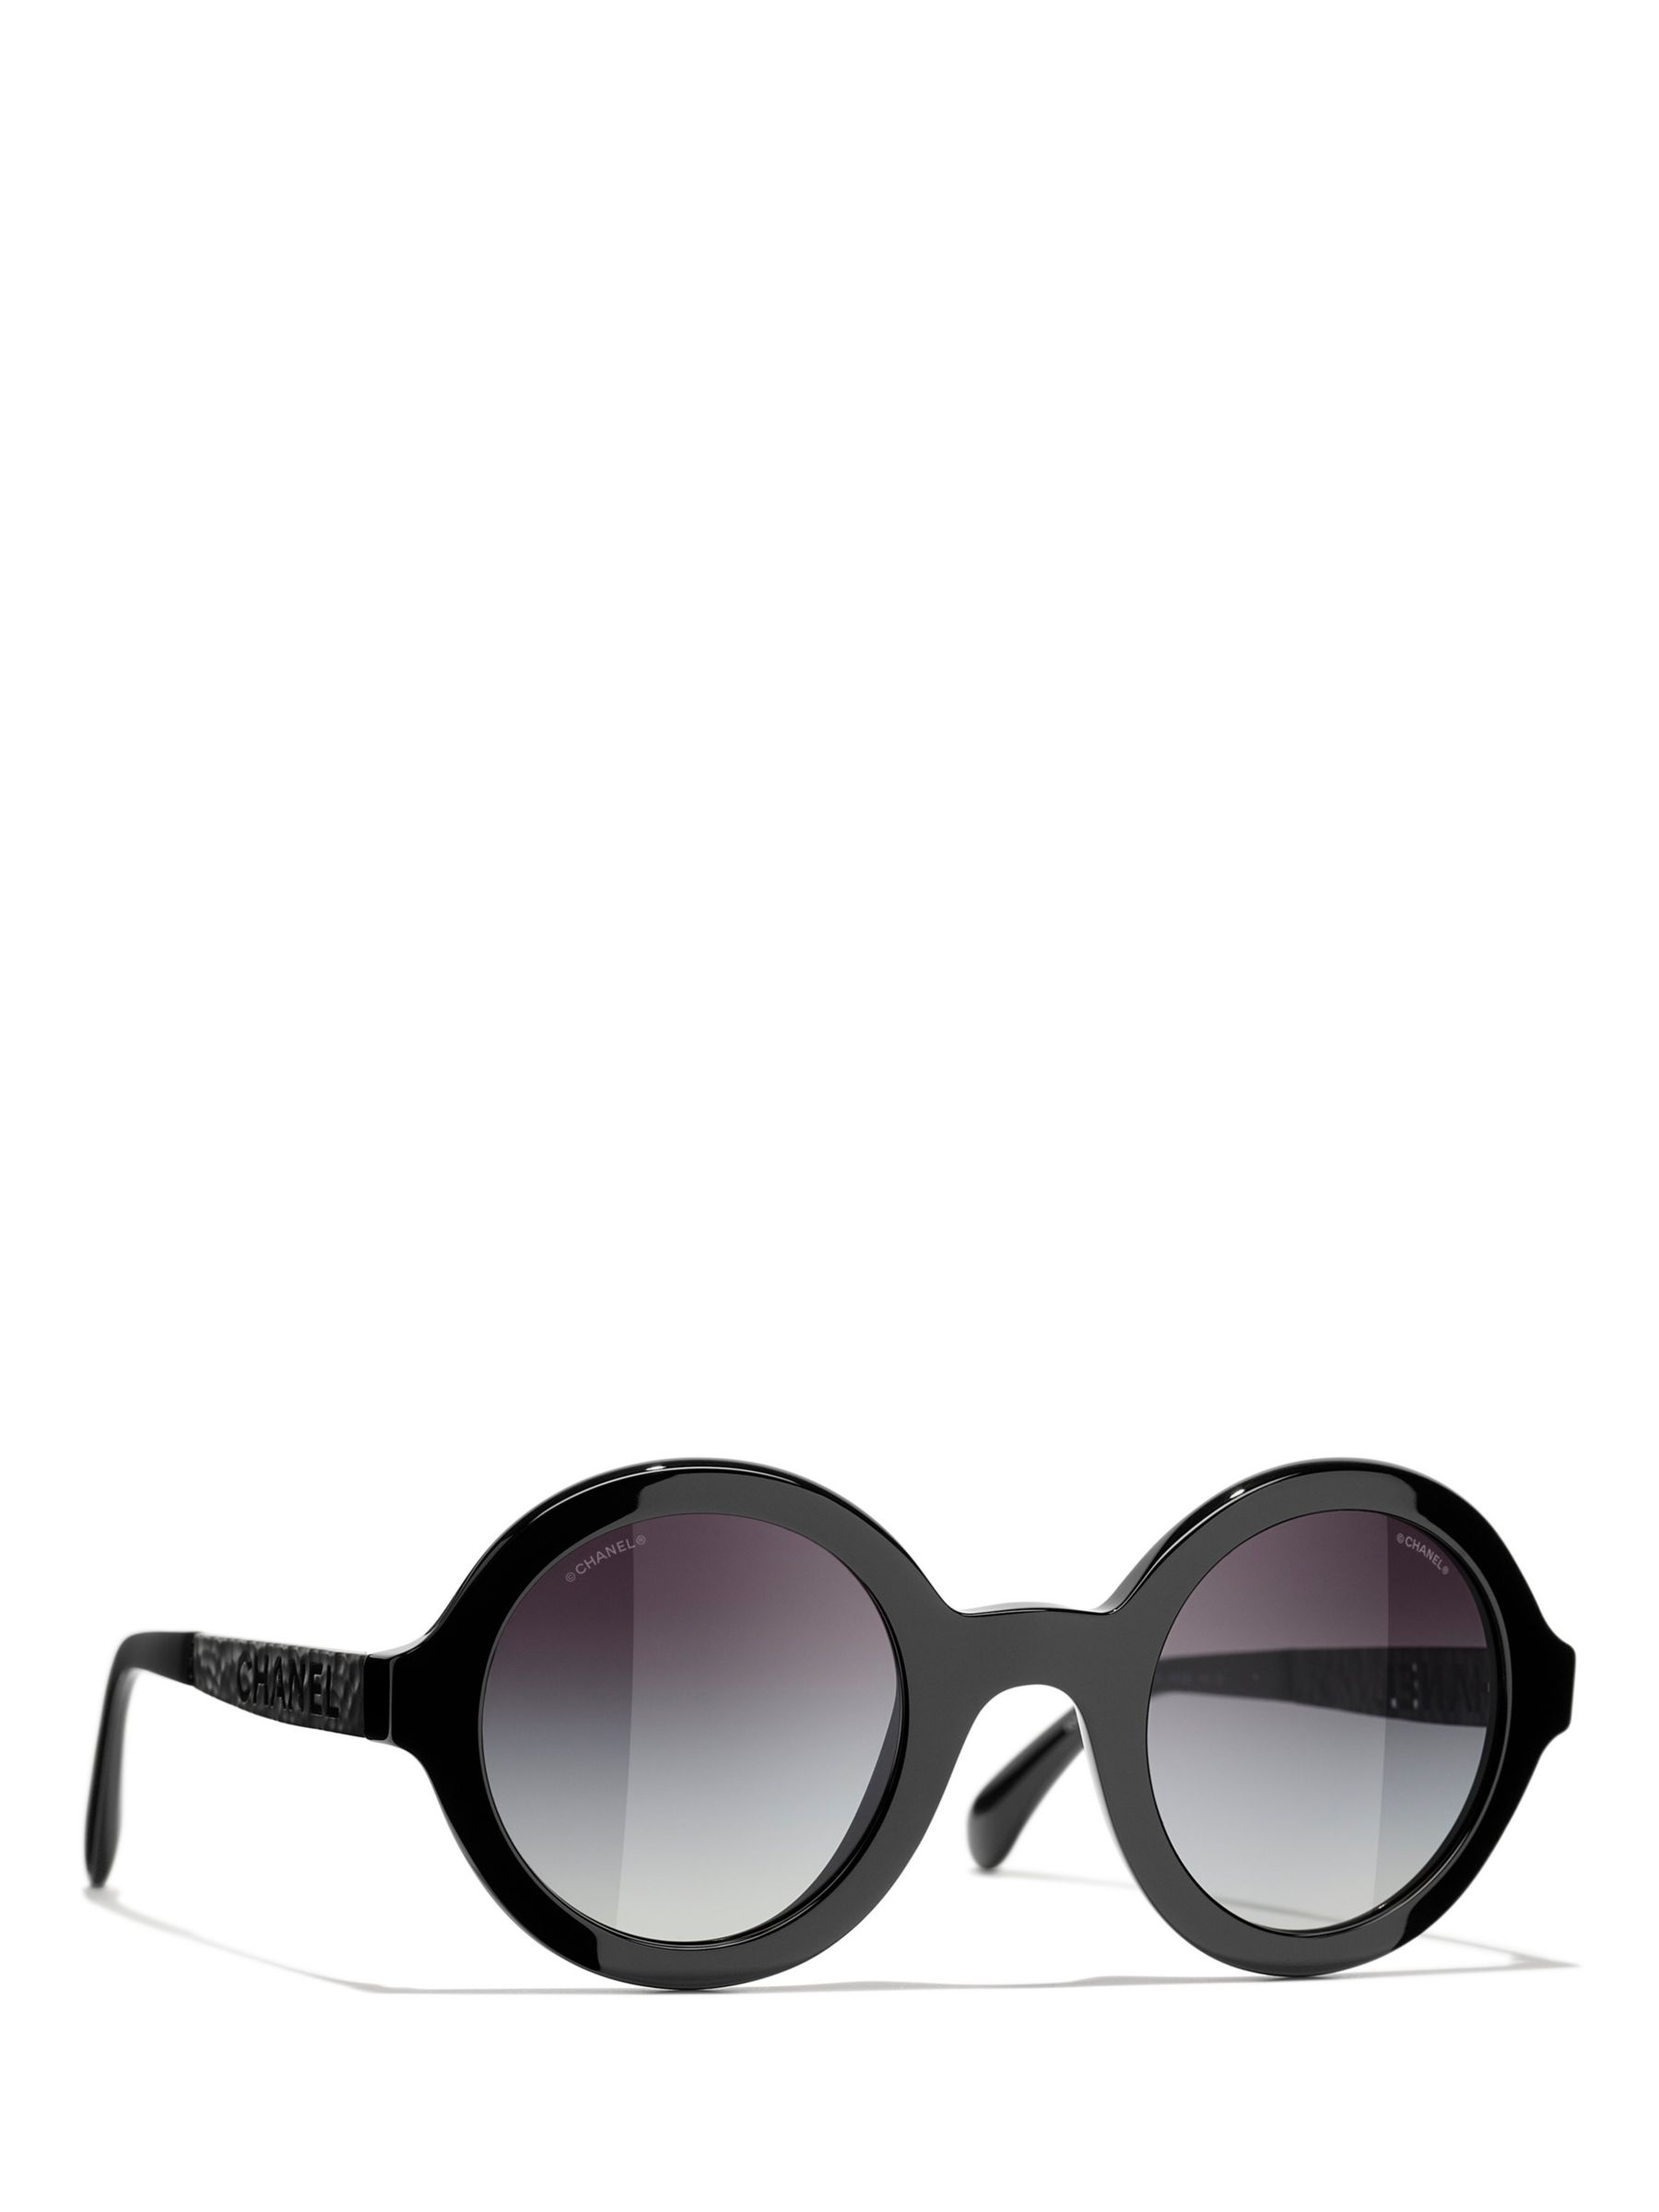 CHANEL Round Sunglasses CH5441 Black/Grey Gradient at John Lewis